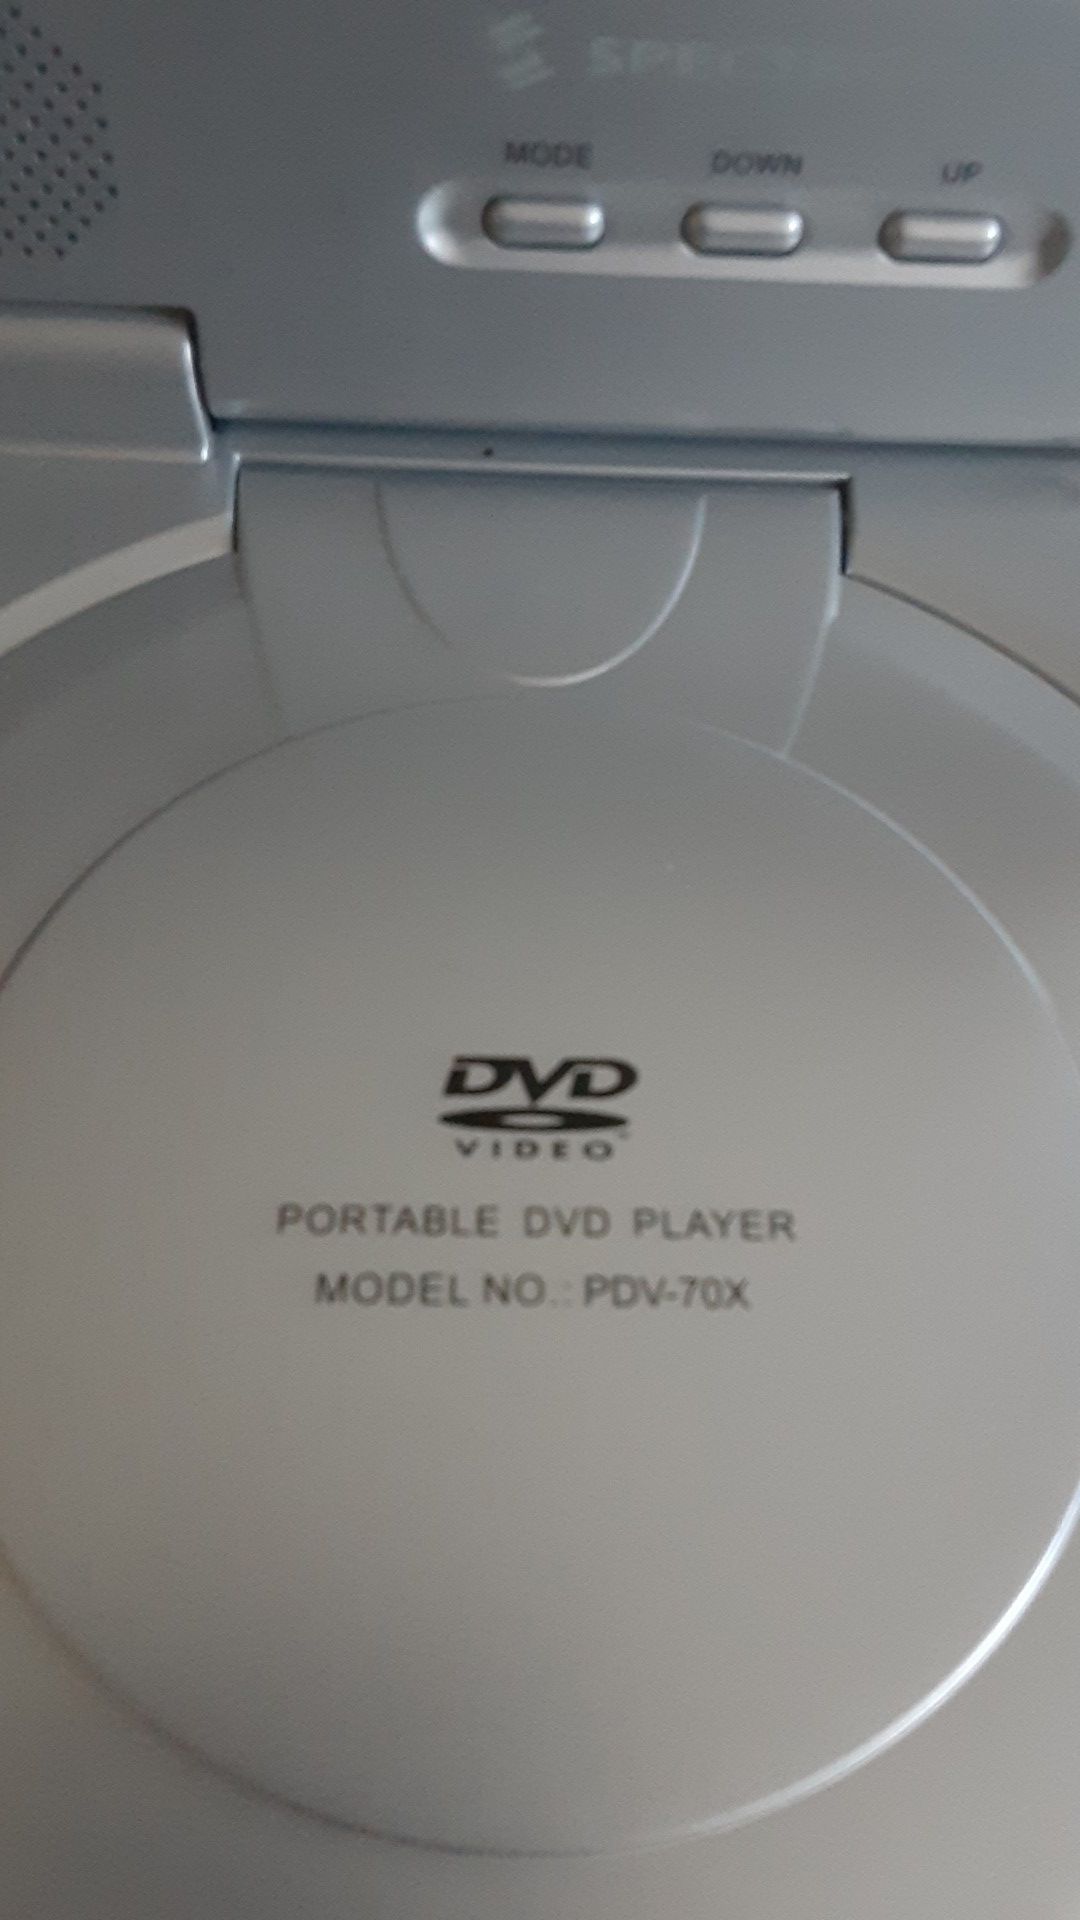 Portable dvd player like new